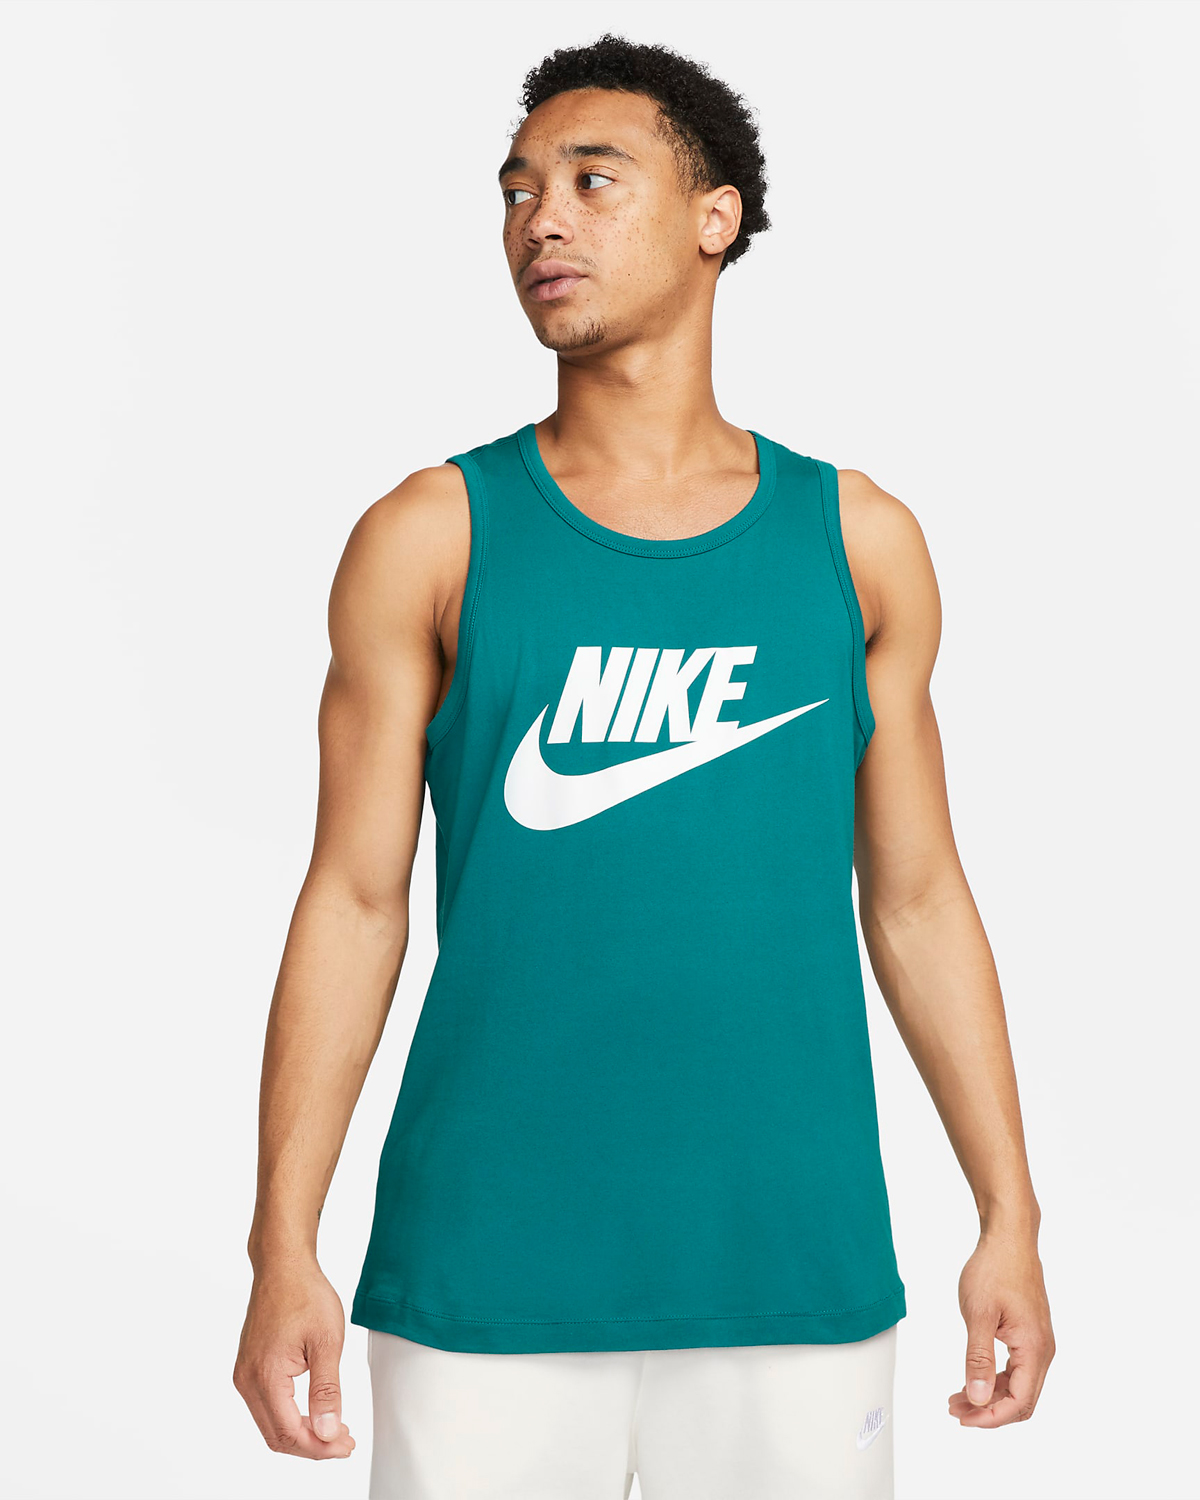 Nike-Sportswear-Tank-Top-Geode-Teal